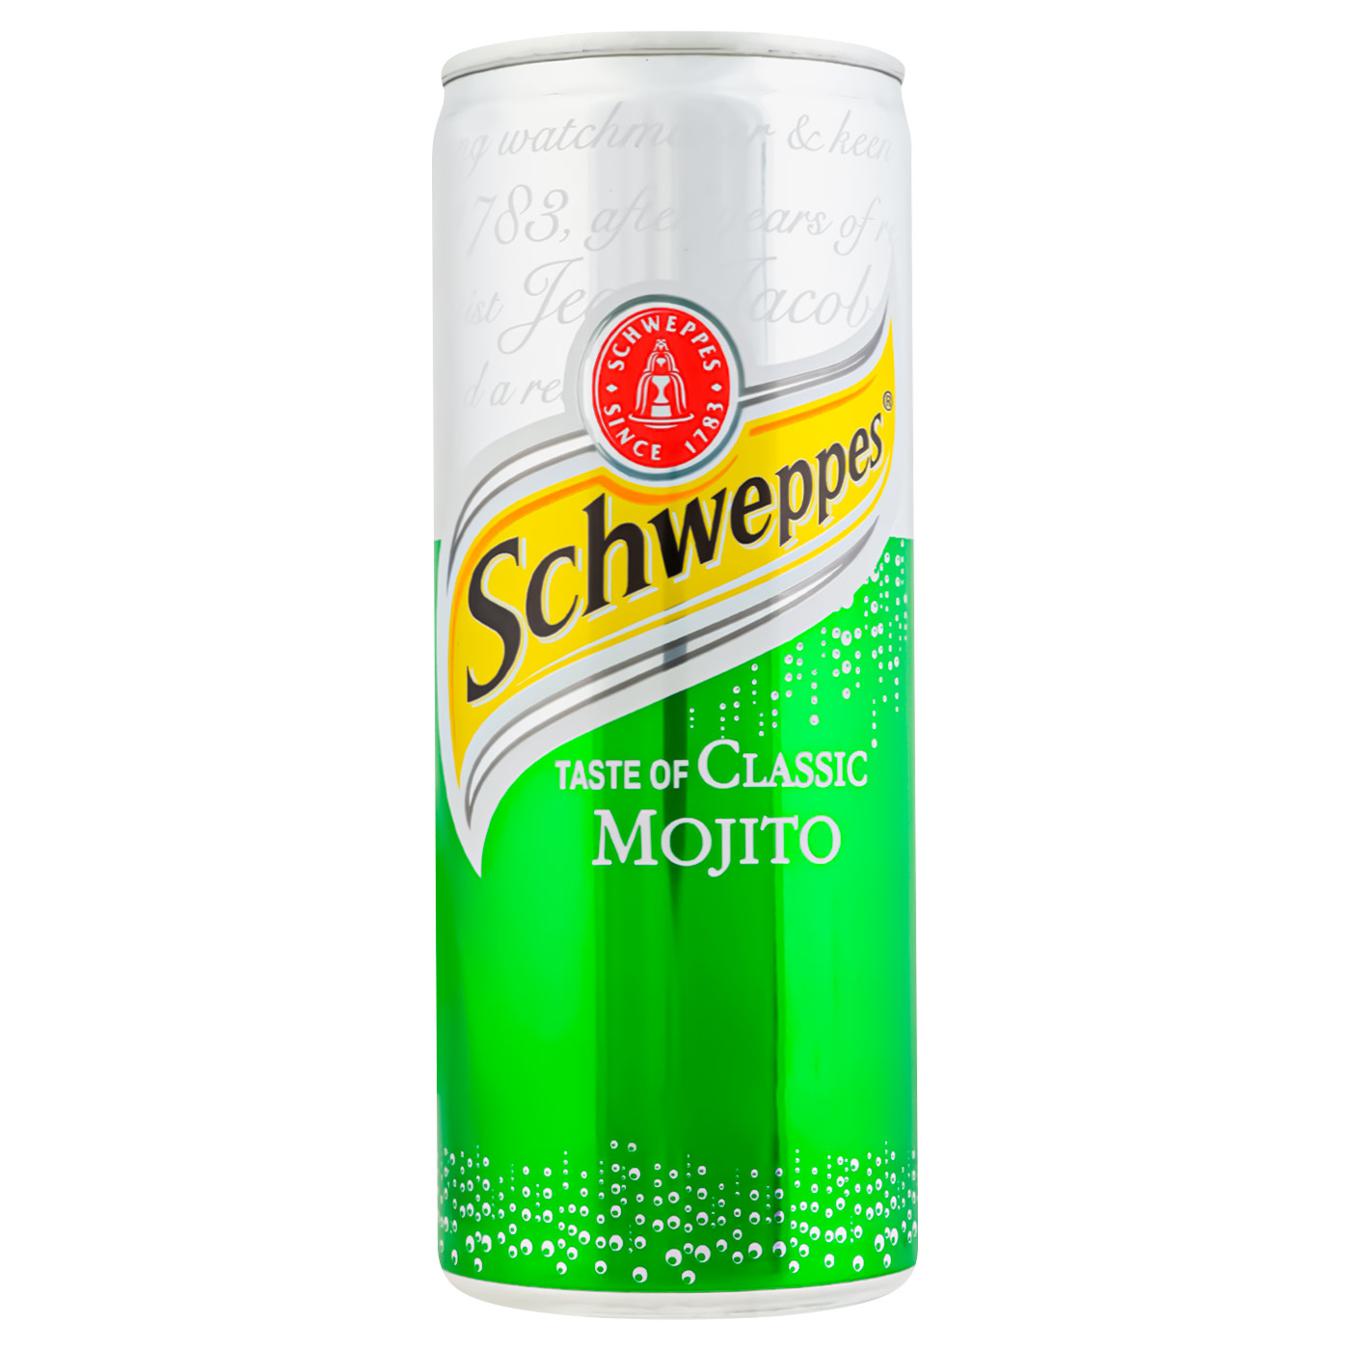 Schweppes Mojito 330ml (Serbia)